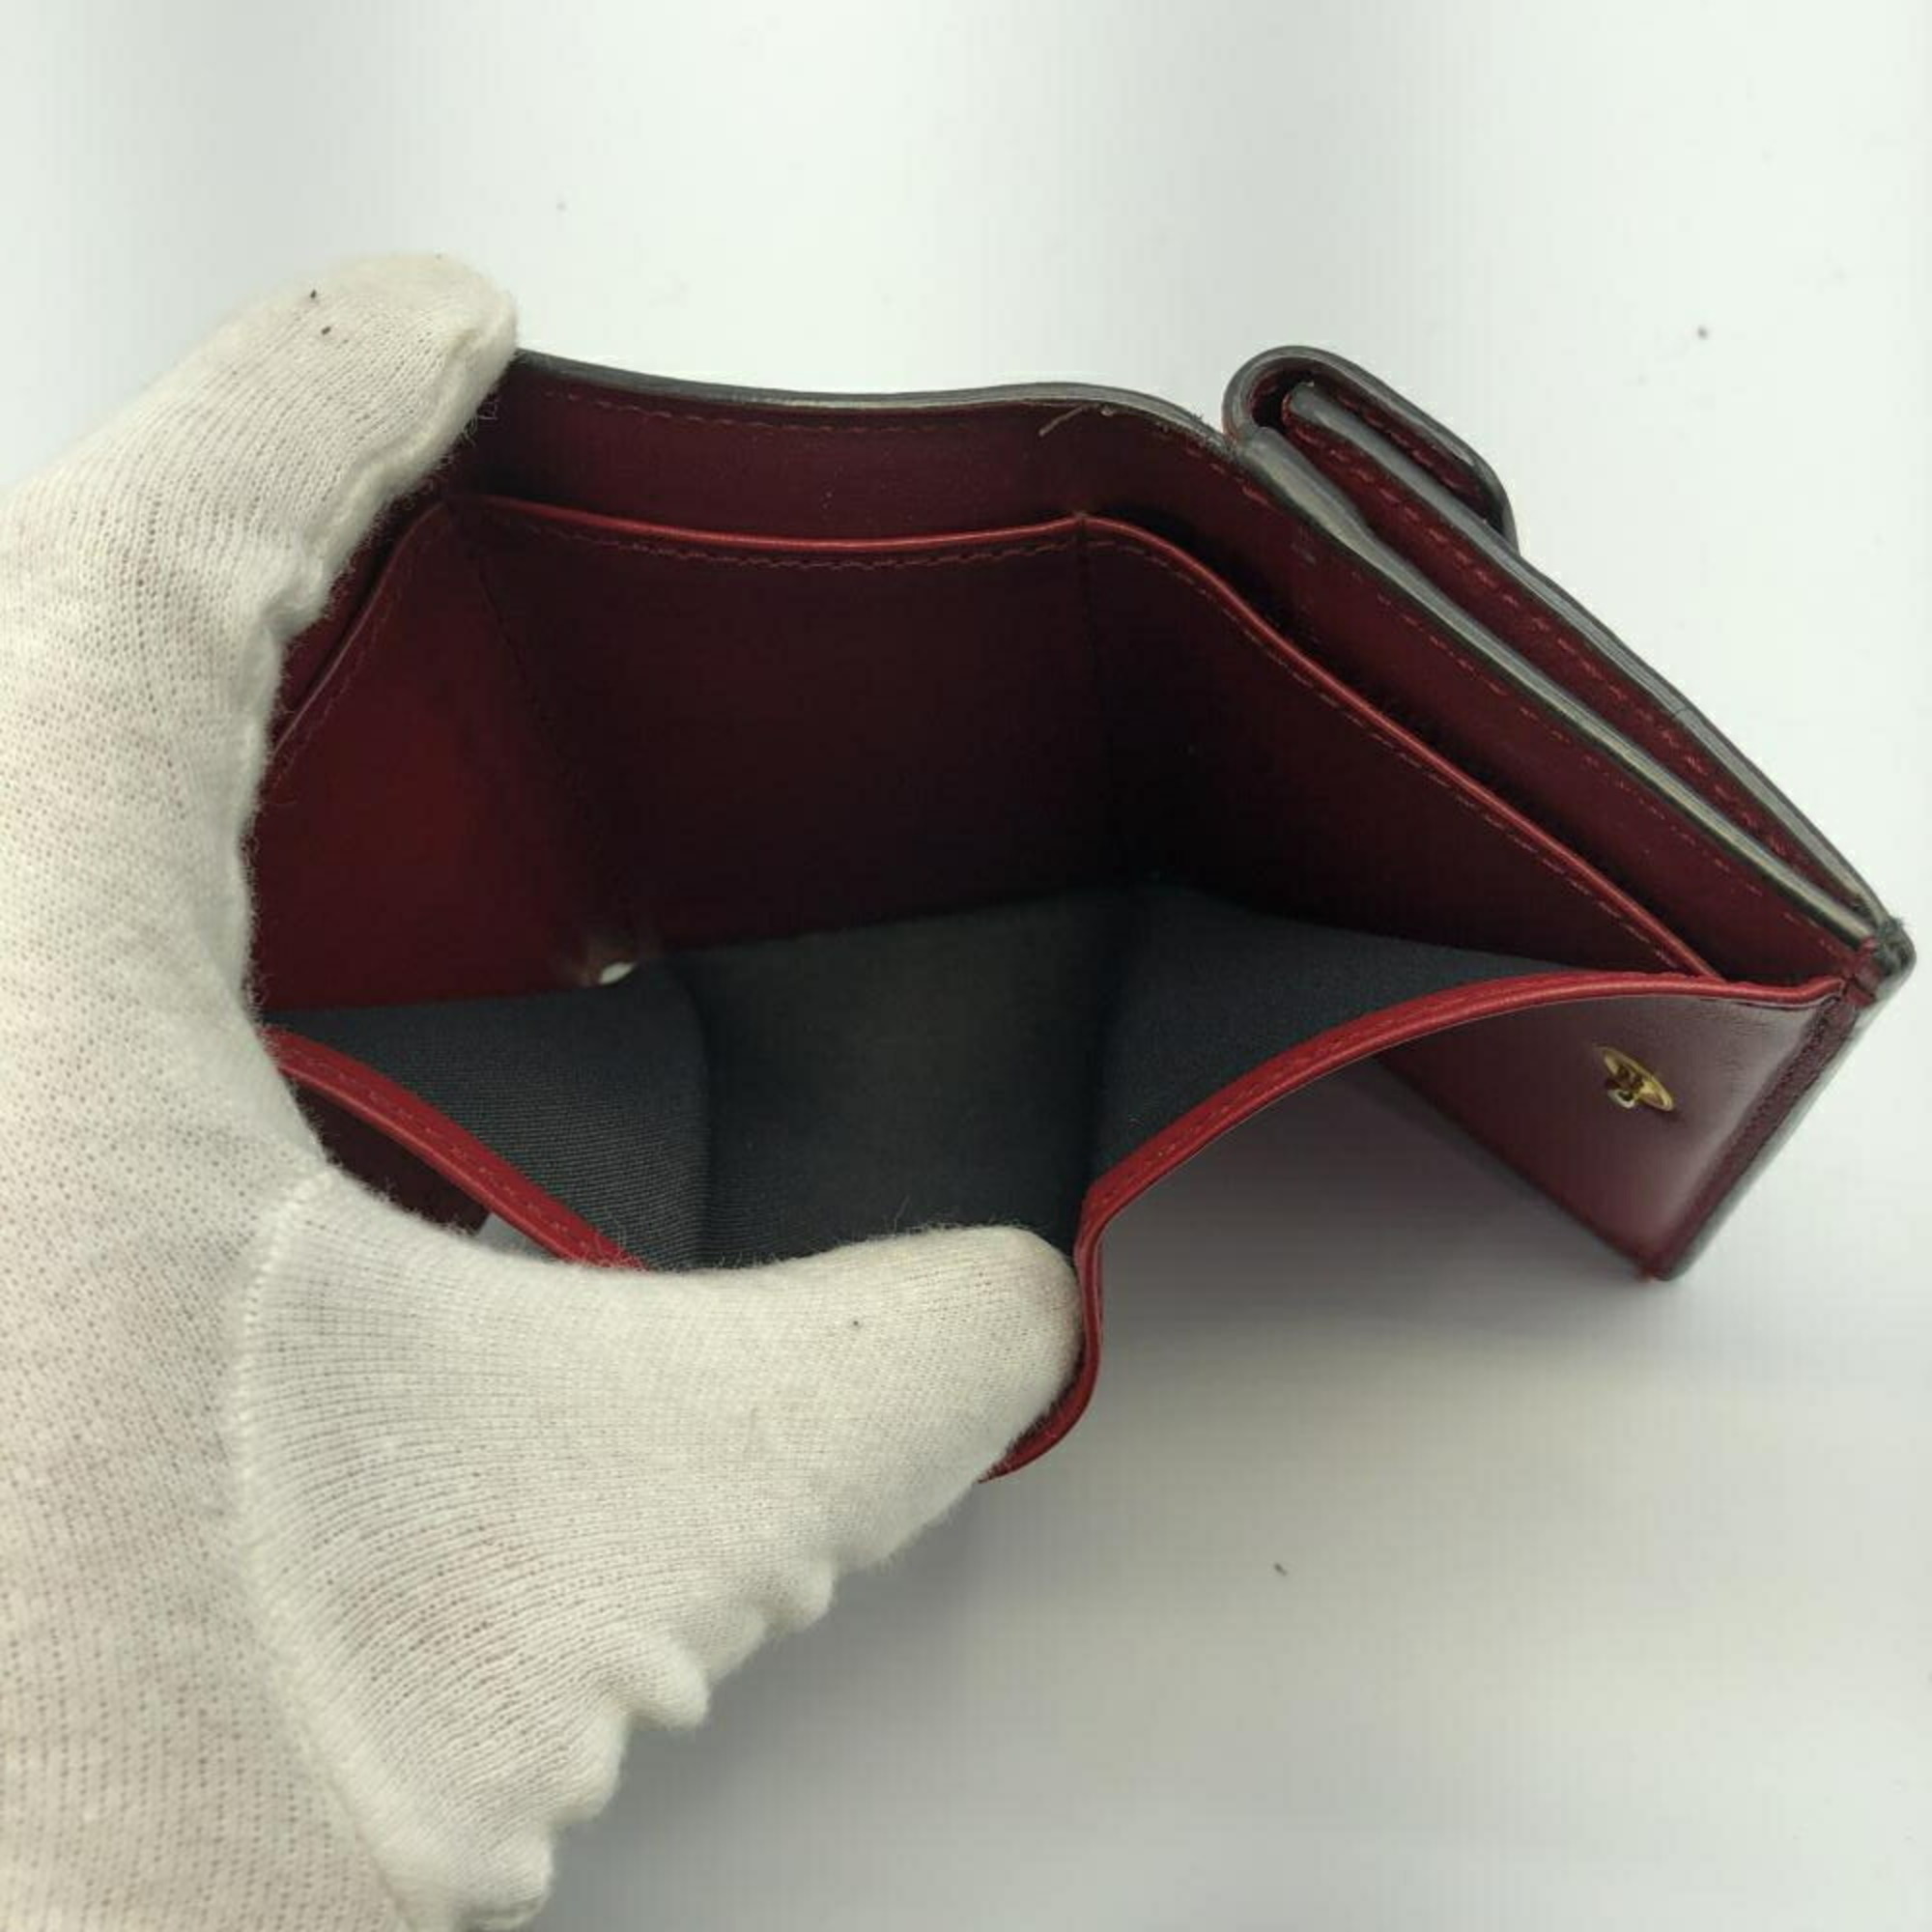 FENDI MICRO TRIFOLD WALLET trifold wallet Fendi red brown